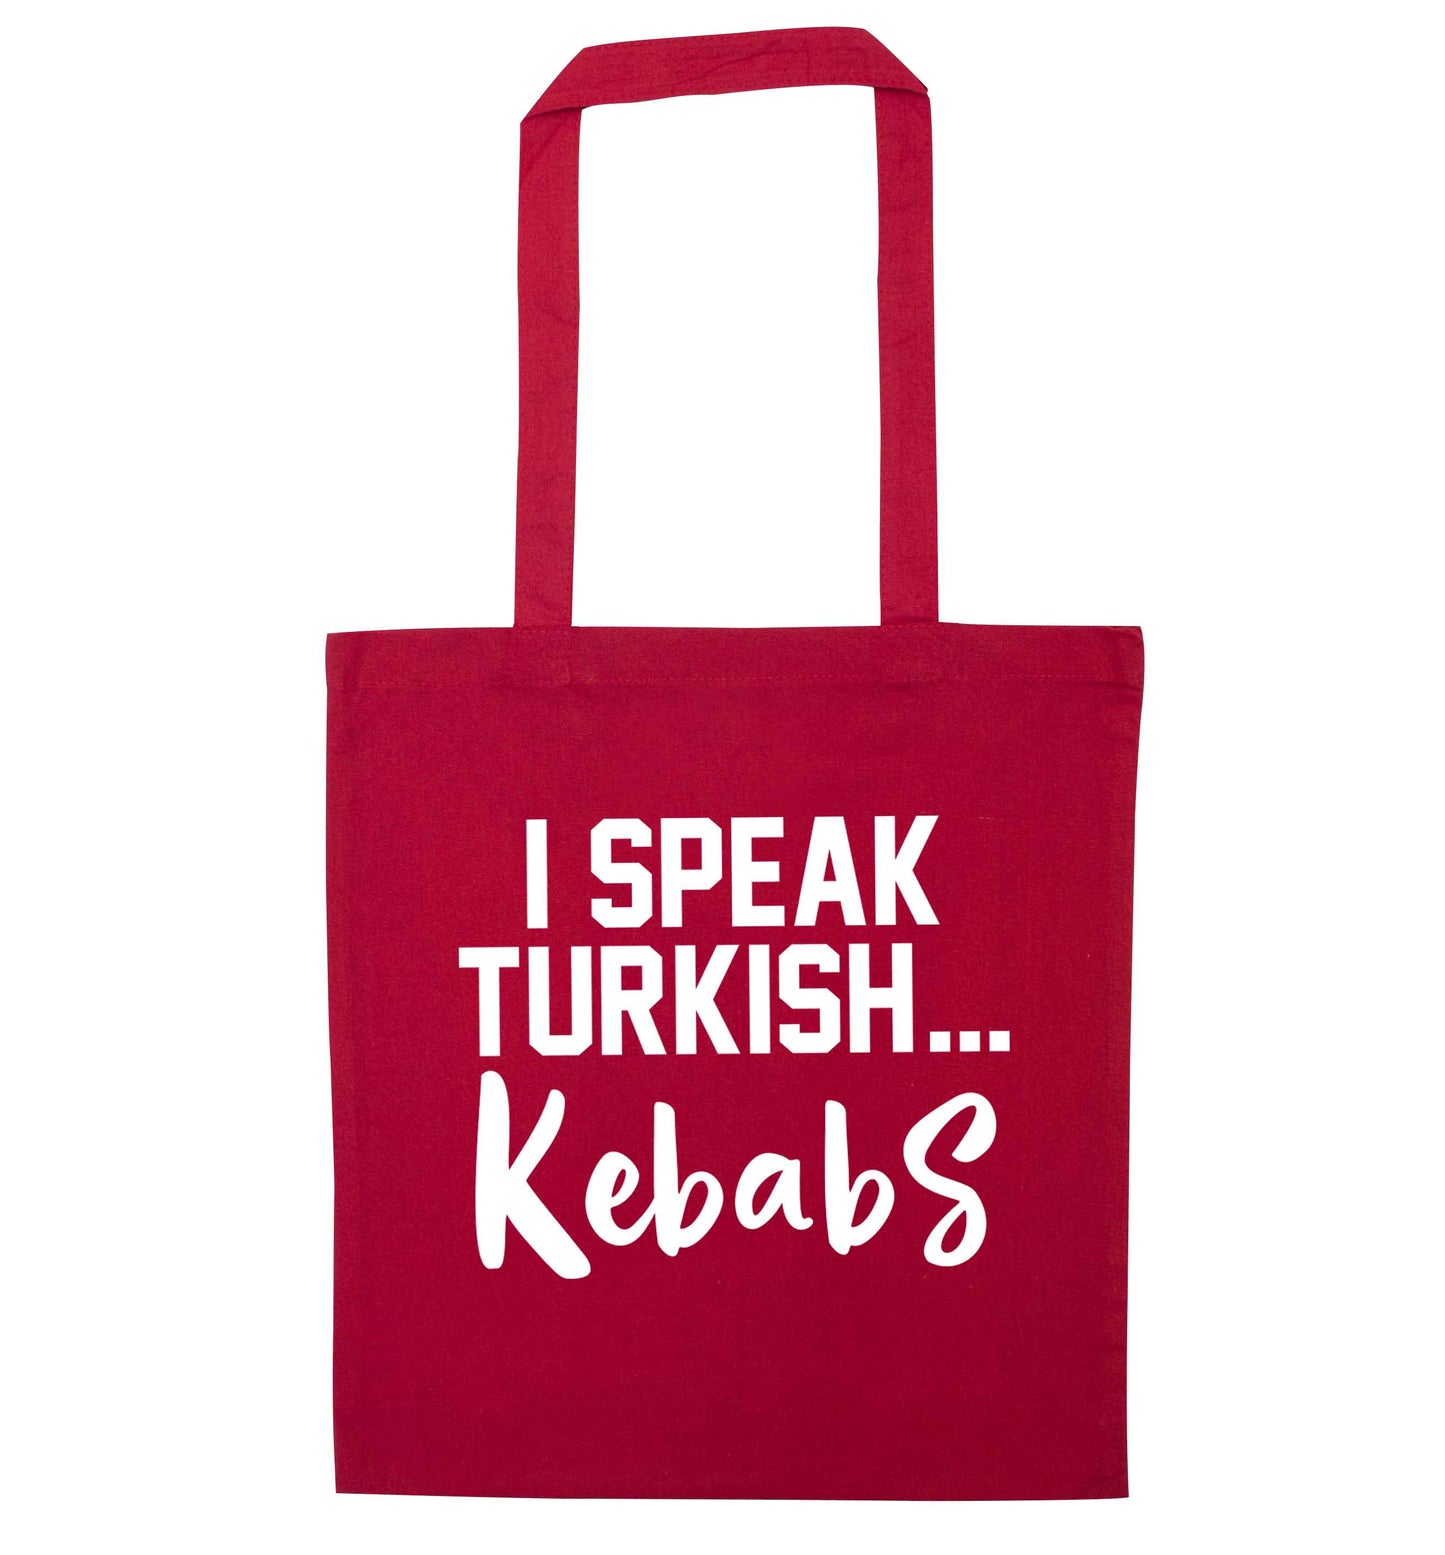 I speak Turkish...kebabs red tote bag